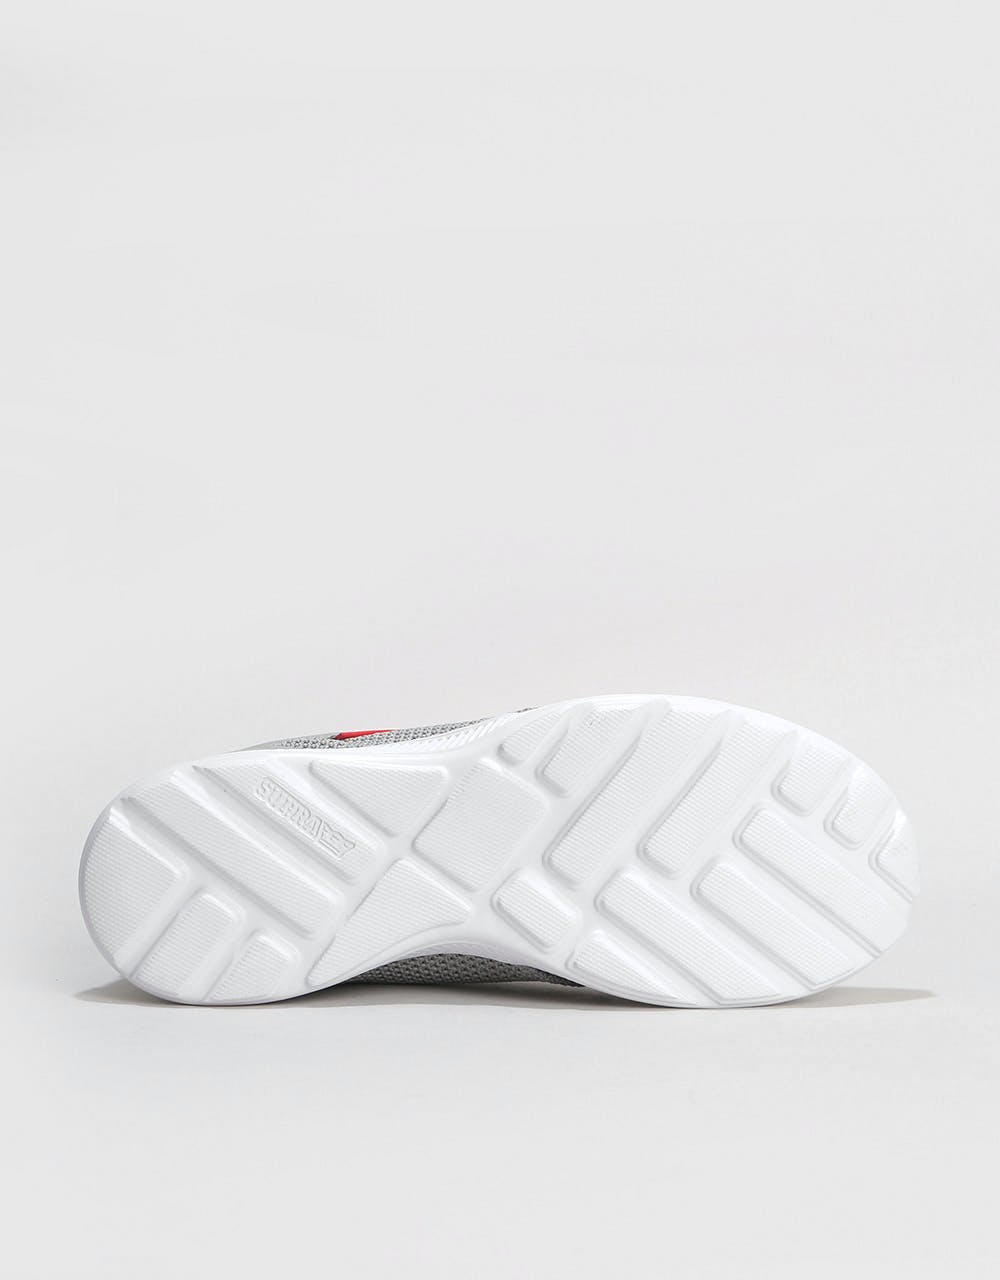 Supra Hammer Run Shoes - Light Grey/Risk Red/White